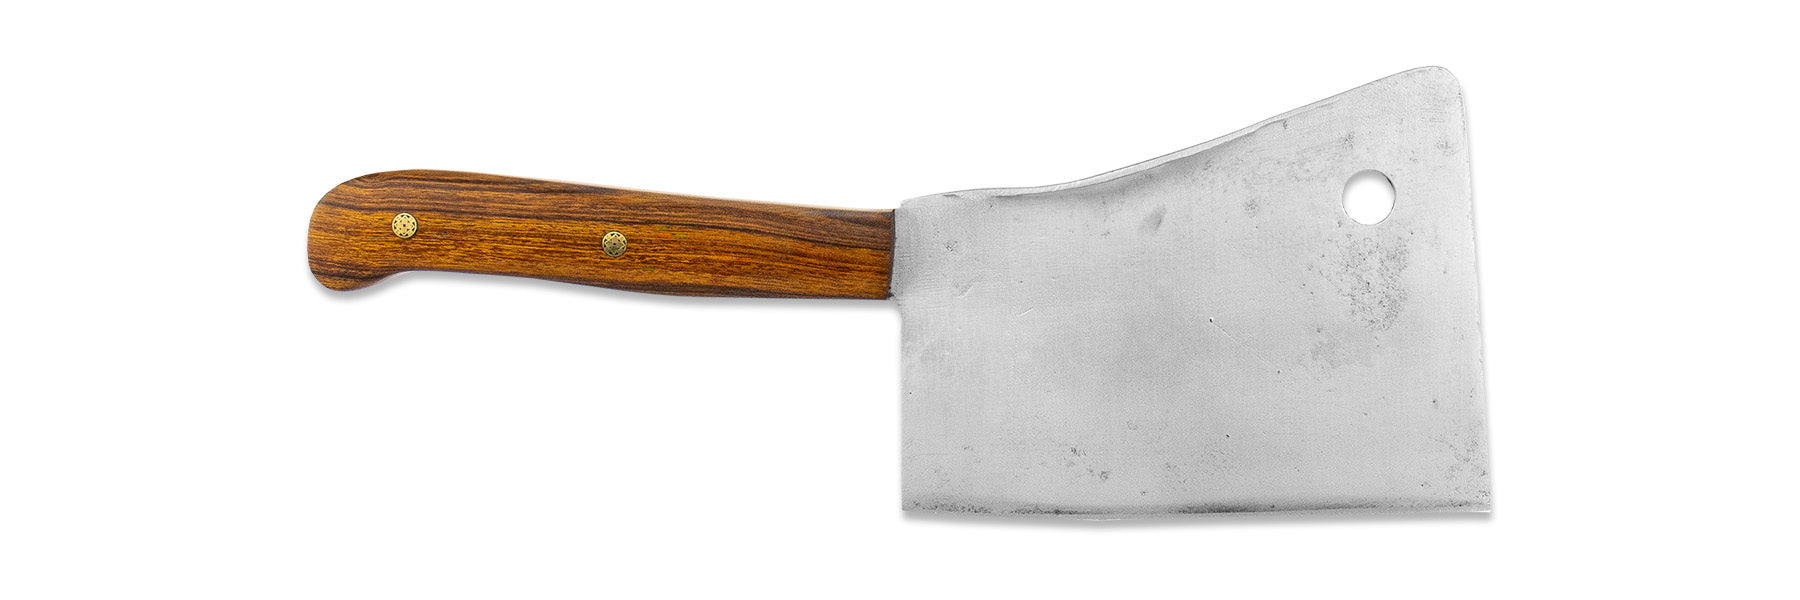 Butcher Knife vs. Cleaver: Which Should I Buy?